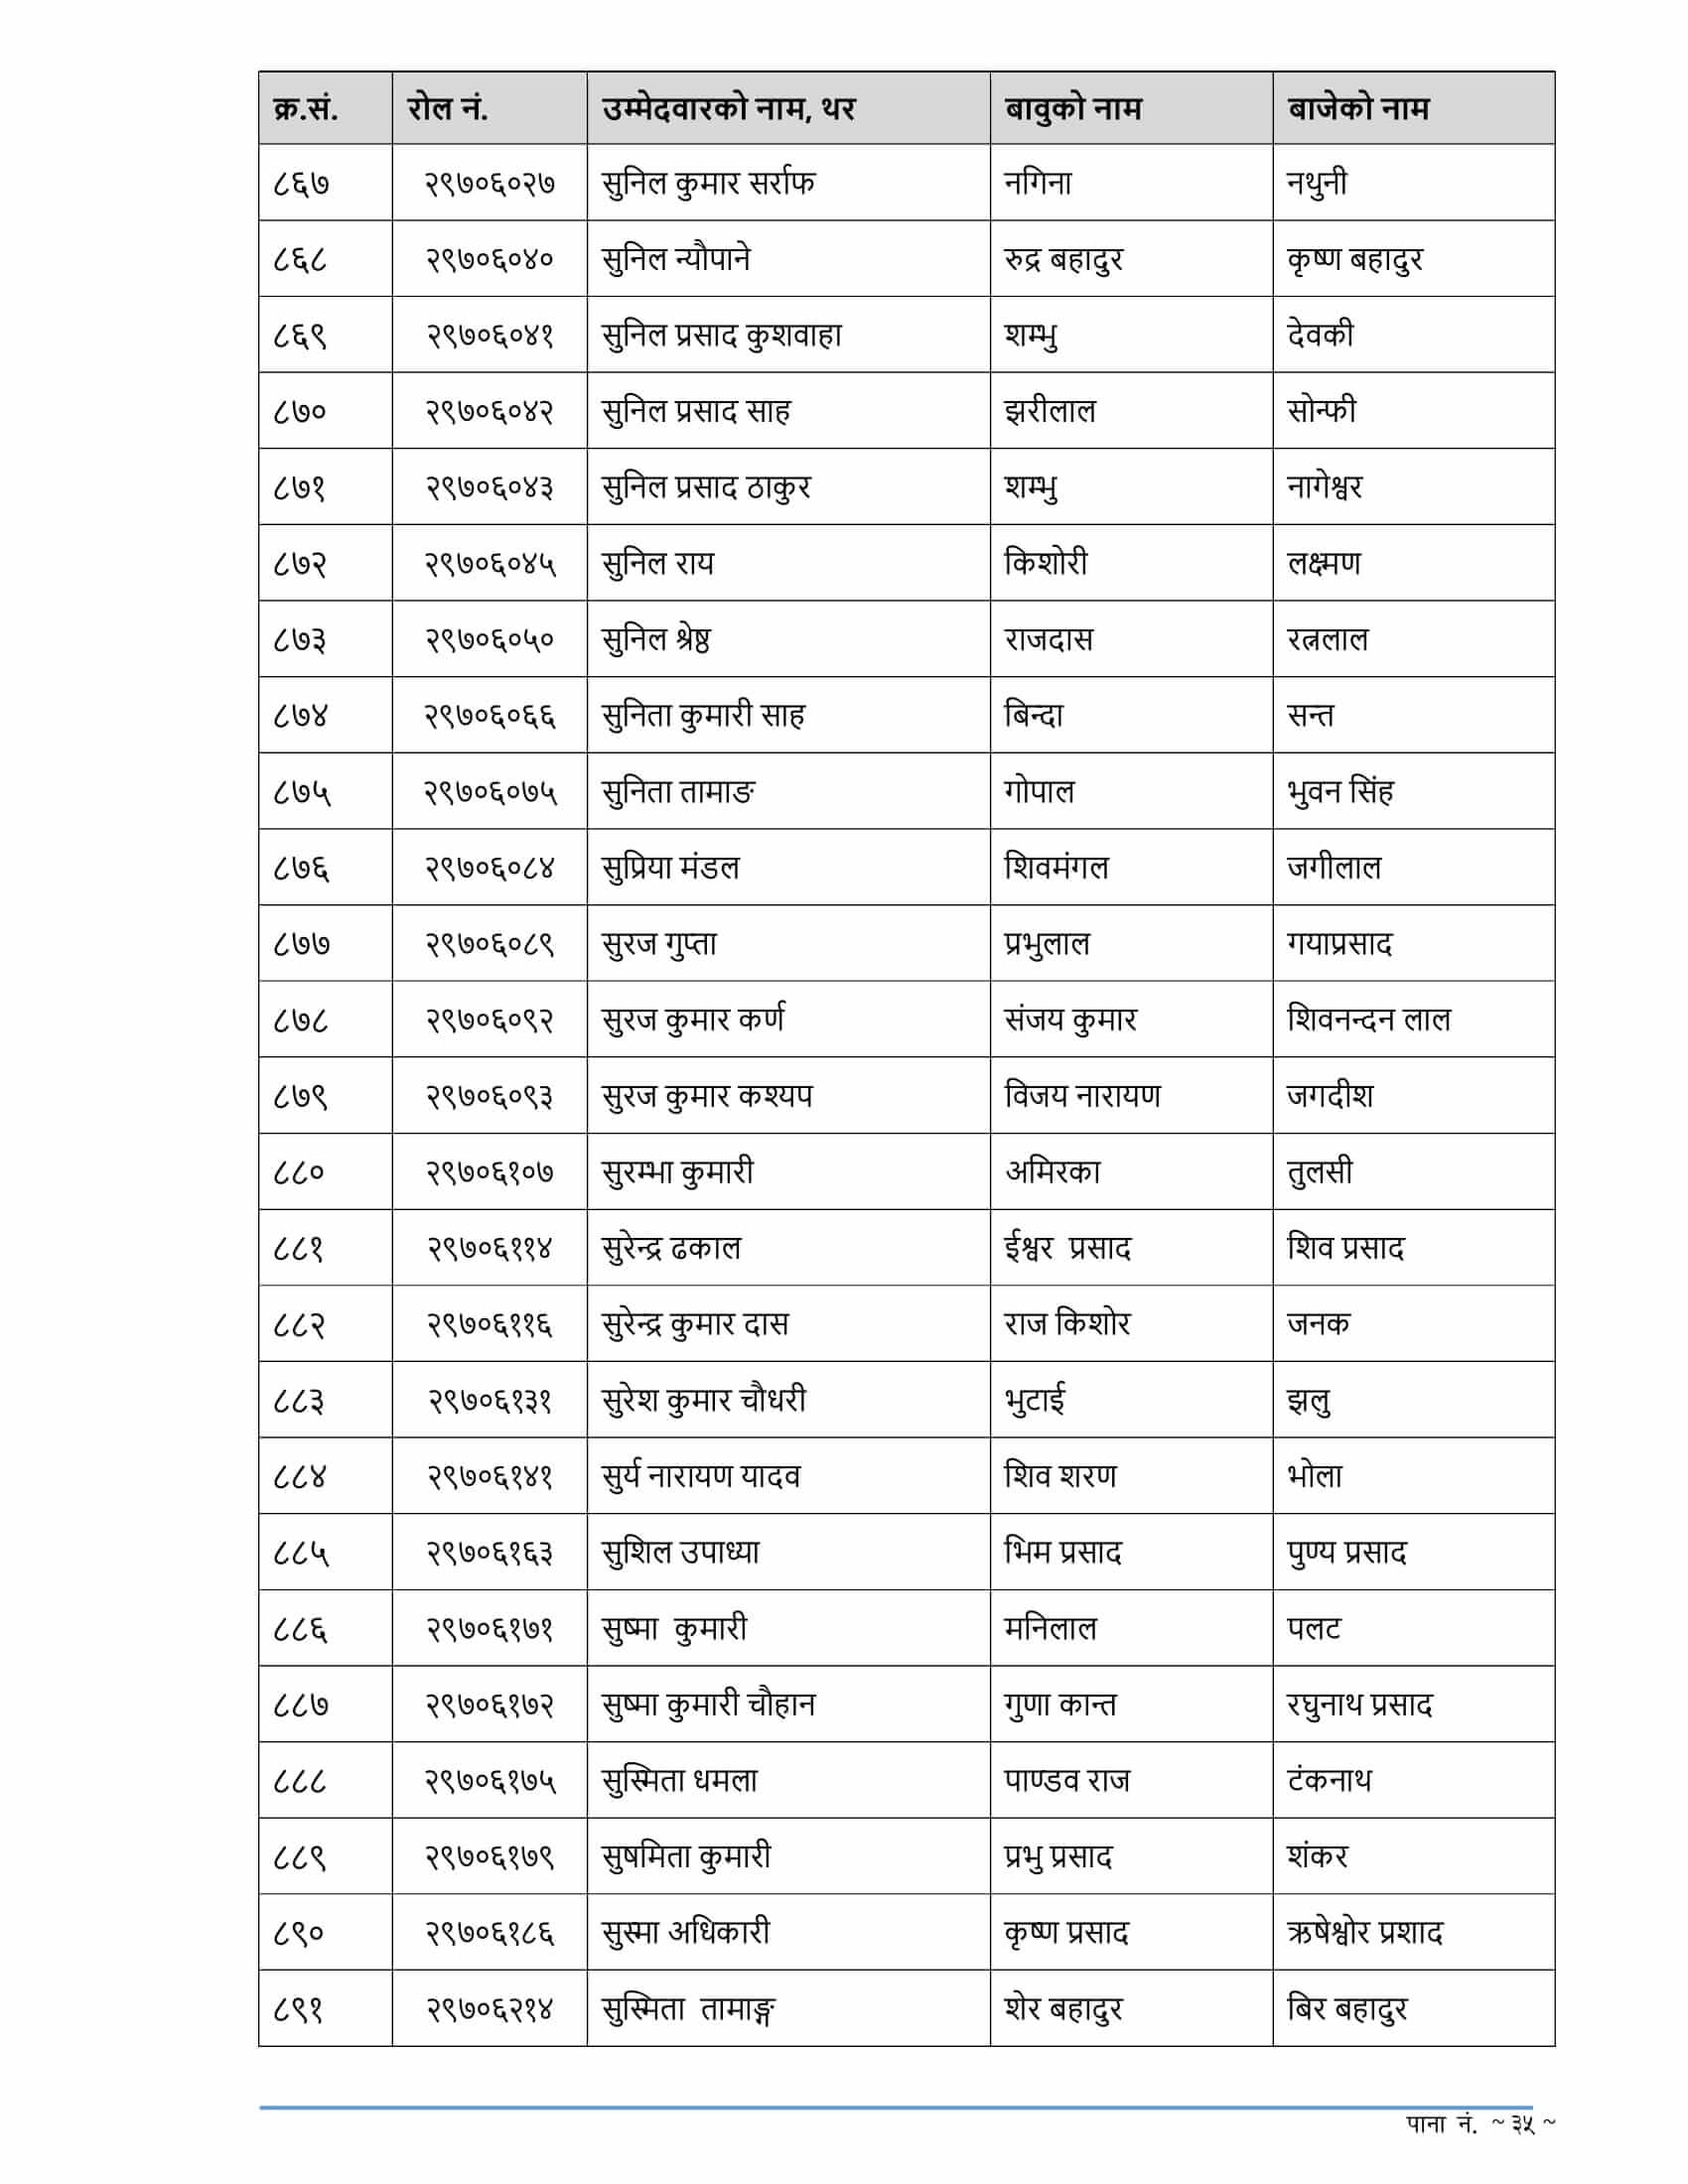 RBB Madhesh Pradesh Written Exam Result of 4th Level Assistant